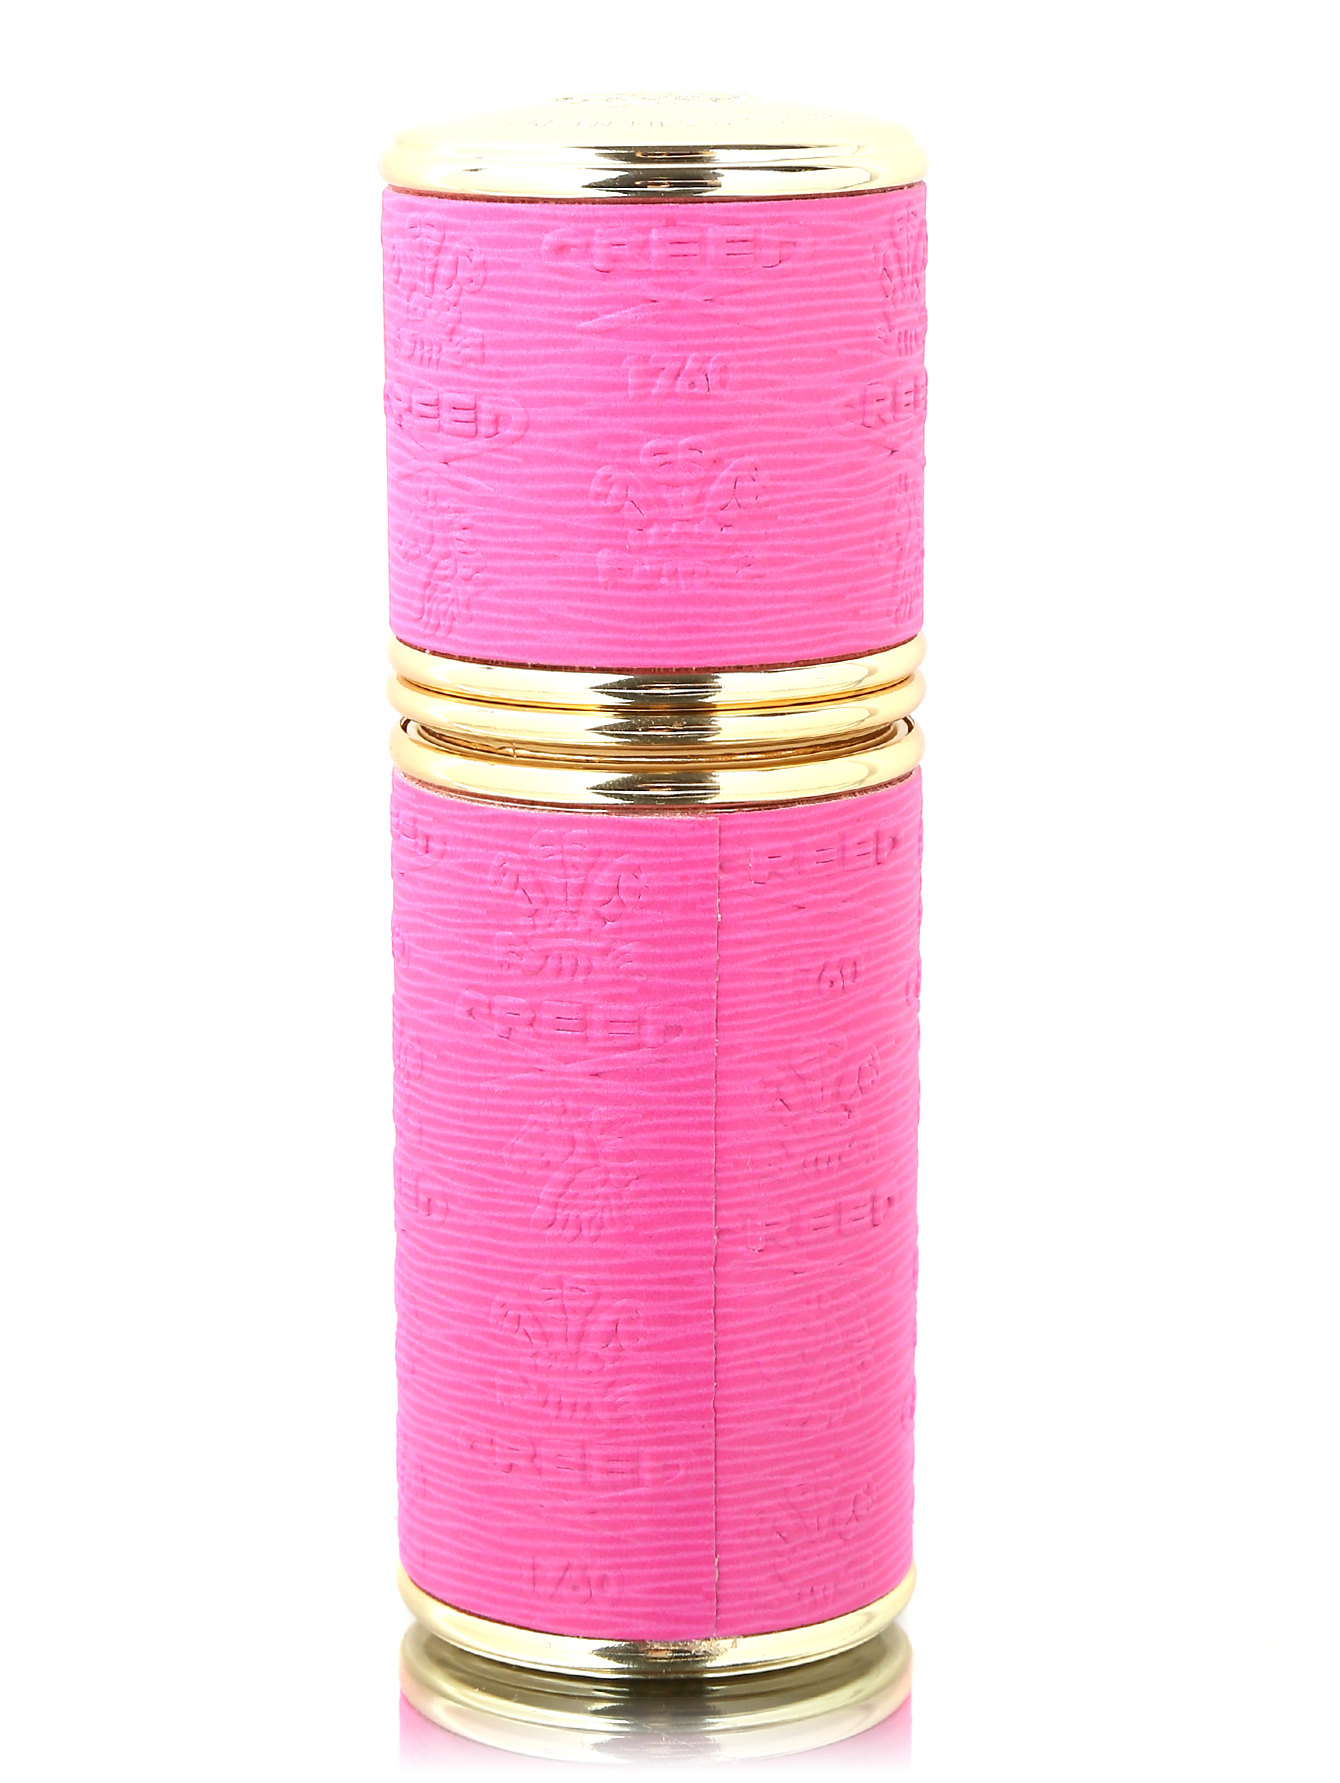 Дорожный футляр 50 мл Gold/Pink Neon Accessories - Общий вид